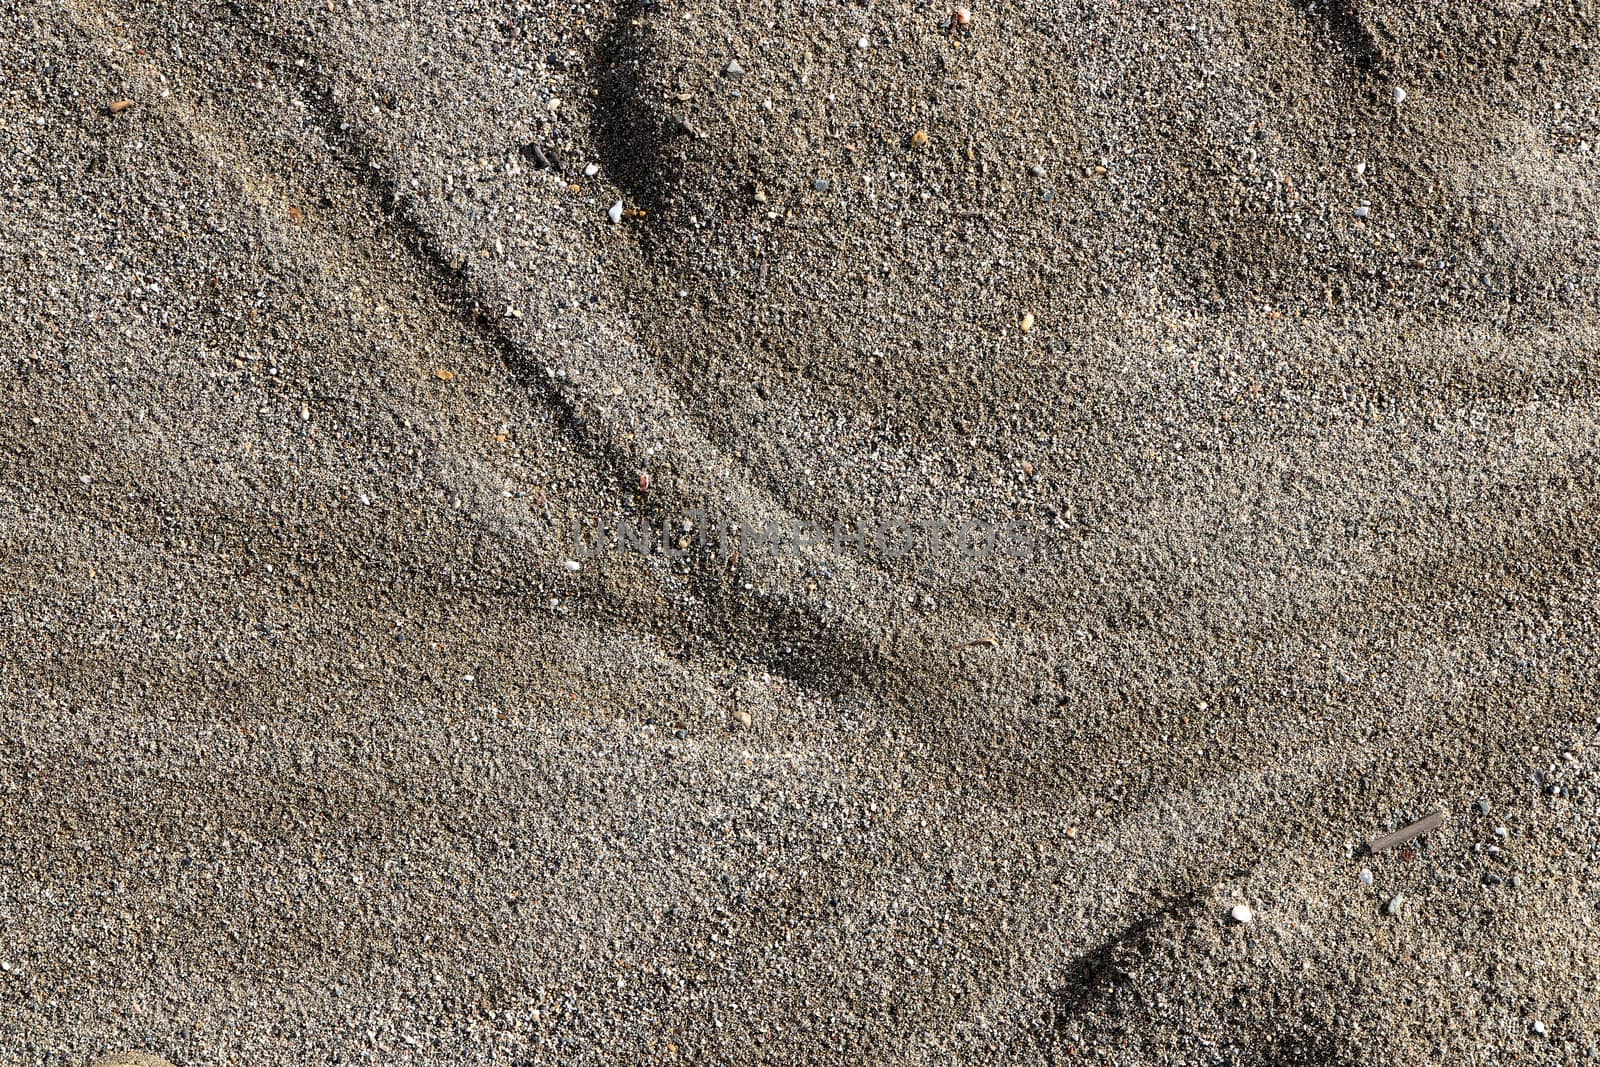 Sea Beach Sand Texture. Sandy Surface Backdrop. Outdoor sand background.